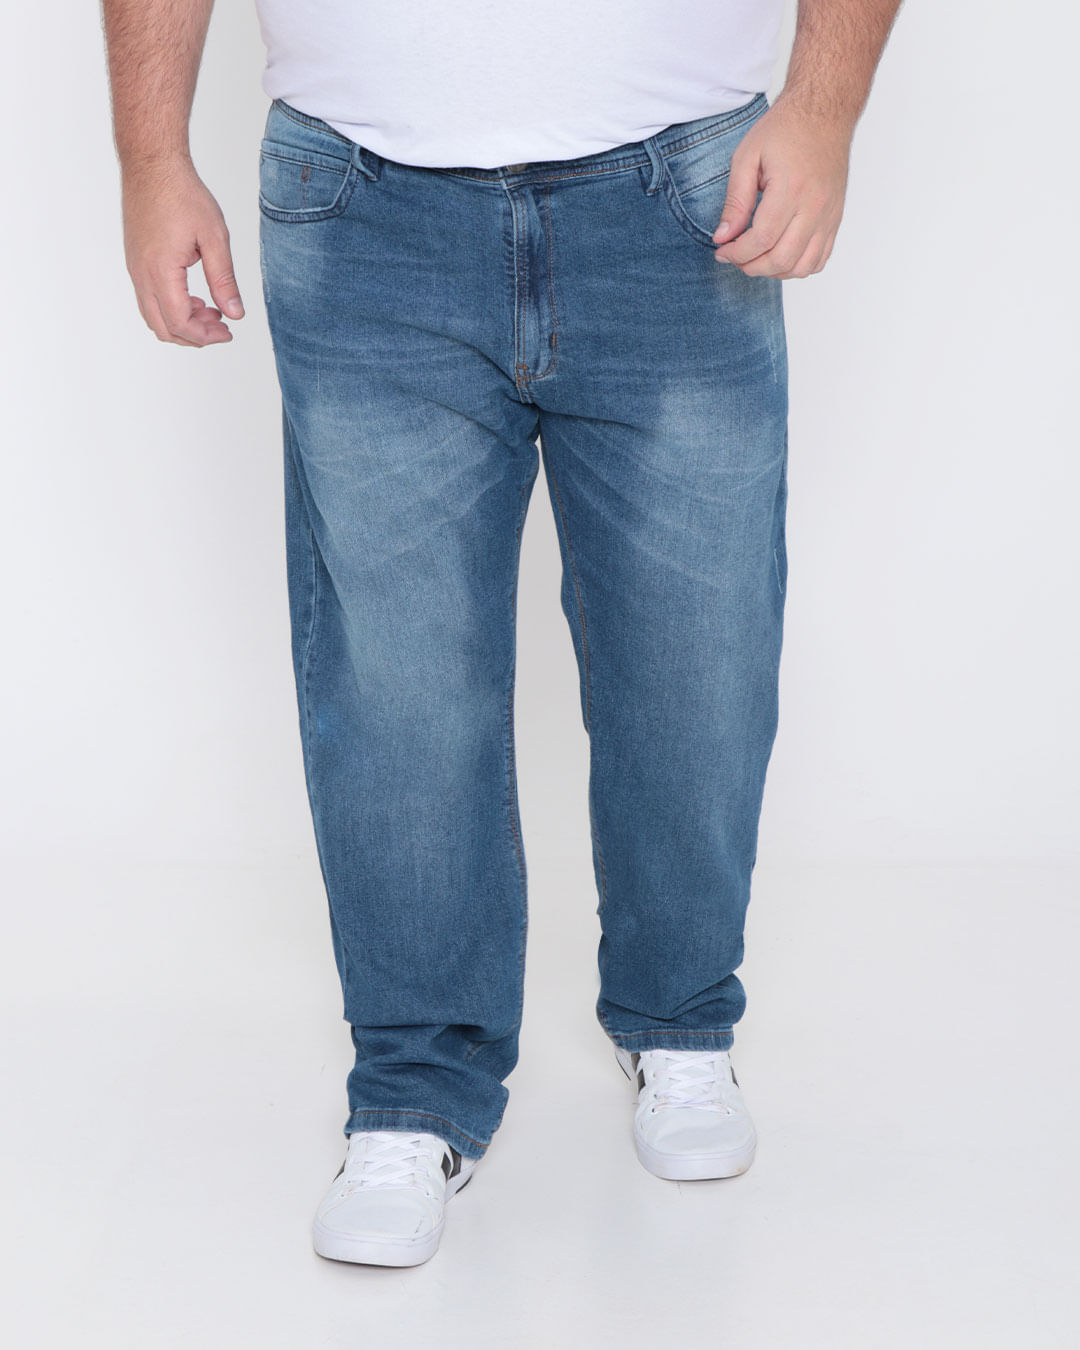 Calca-Jeans-Masculina-Plus-Size-Reta-Gangster-Azul